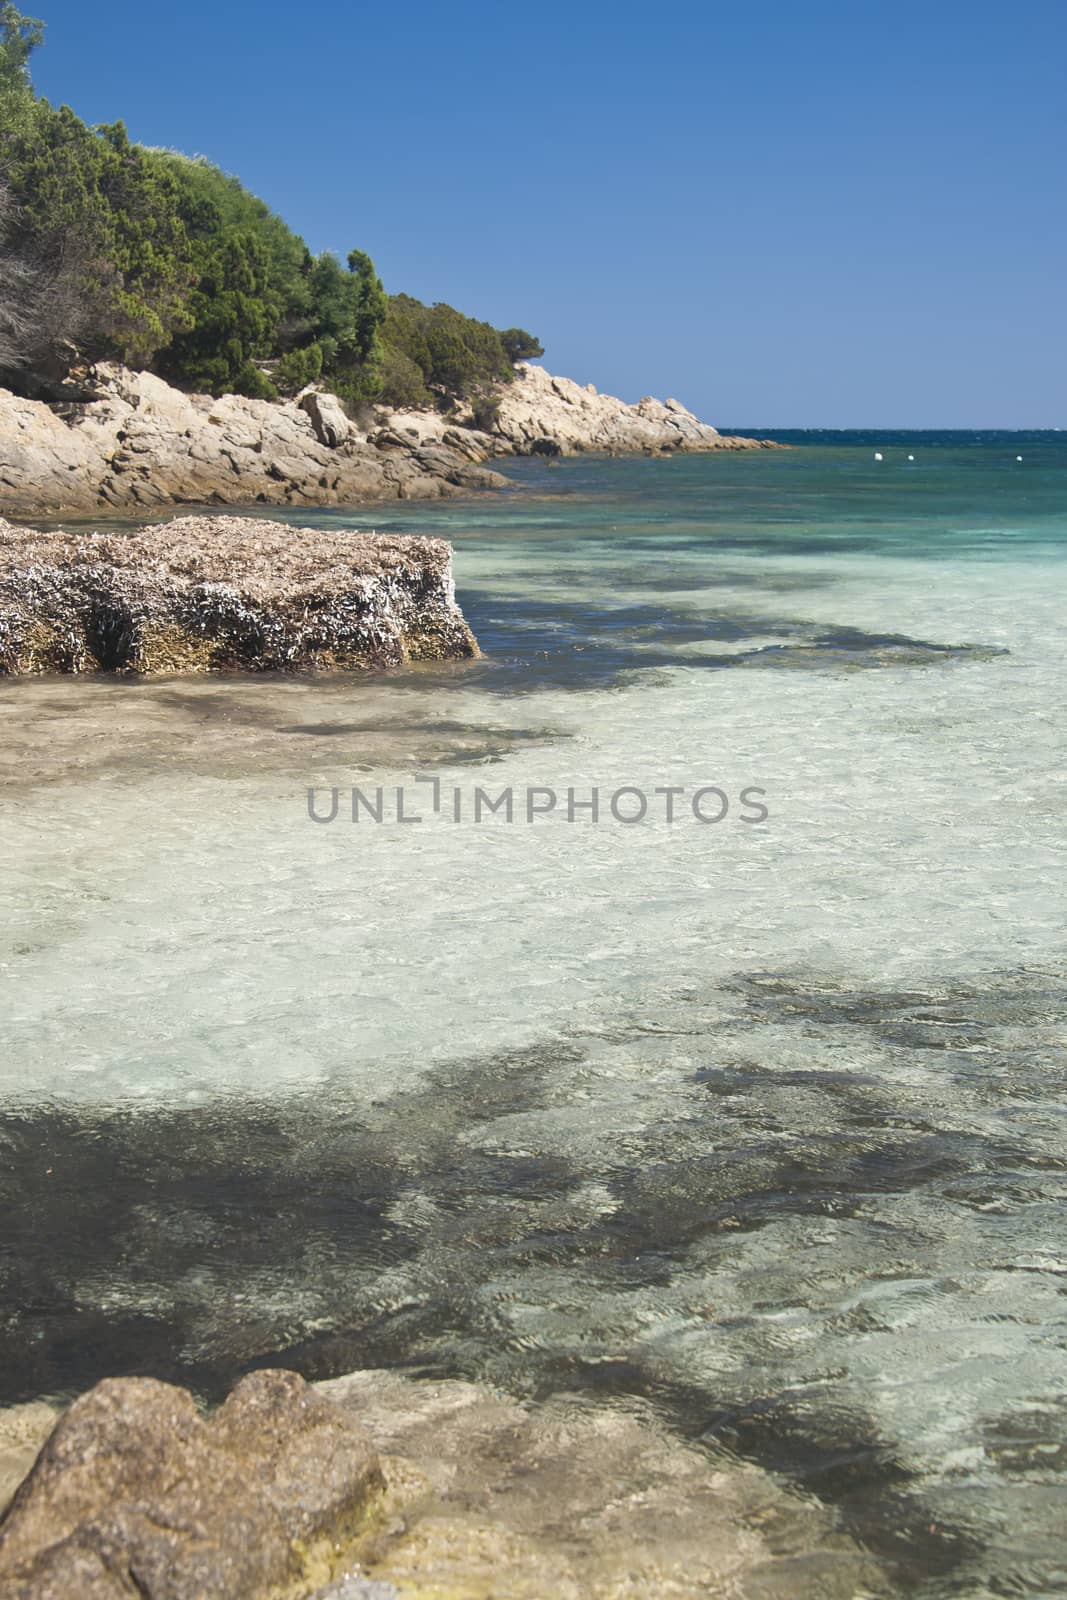 The wonderful colors of the sea in cala granu, a bay near Porto Cervo in Costa Smeralda